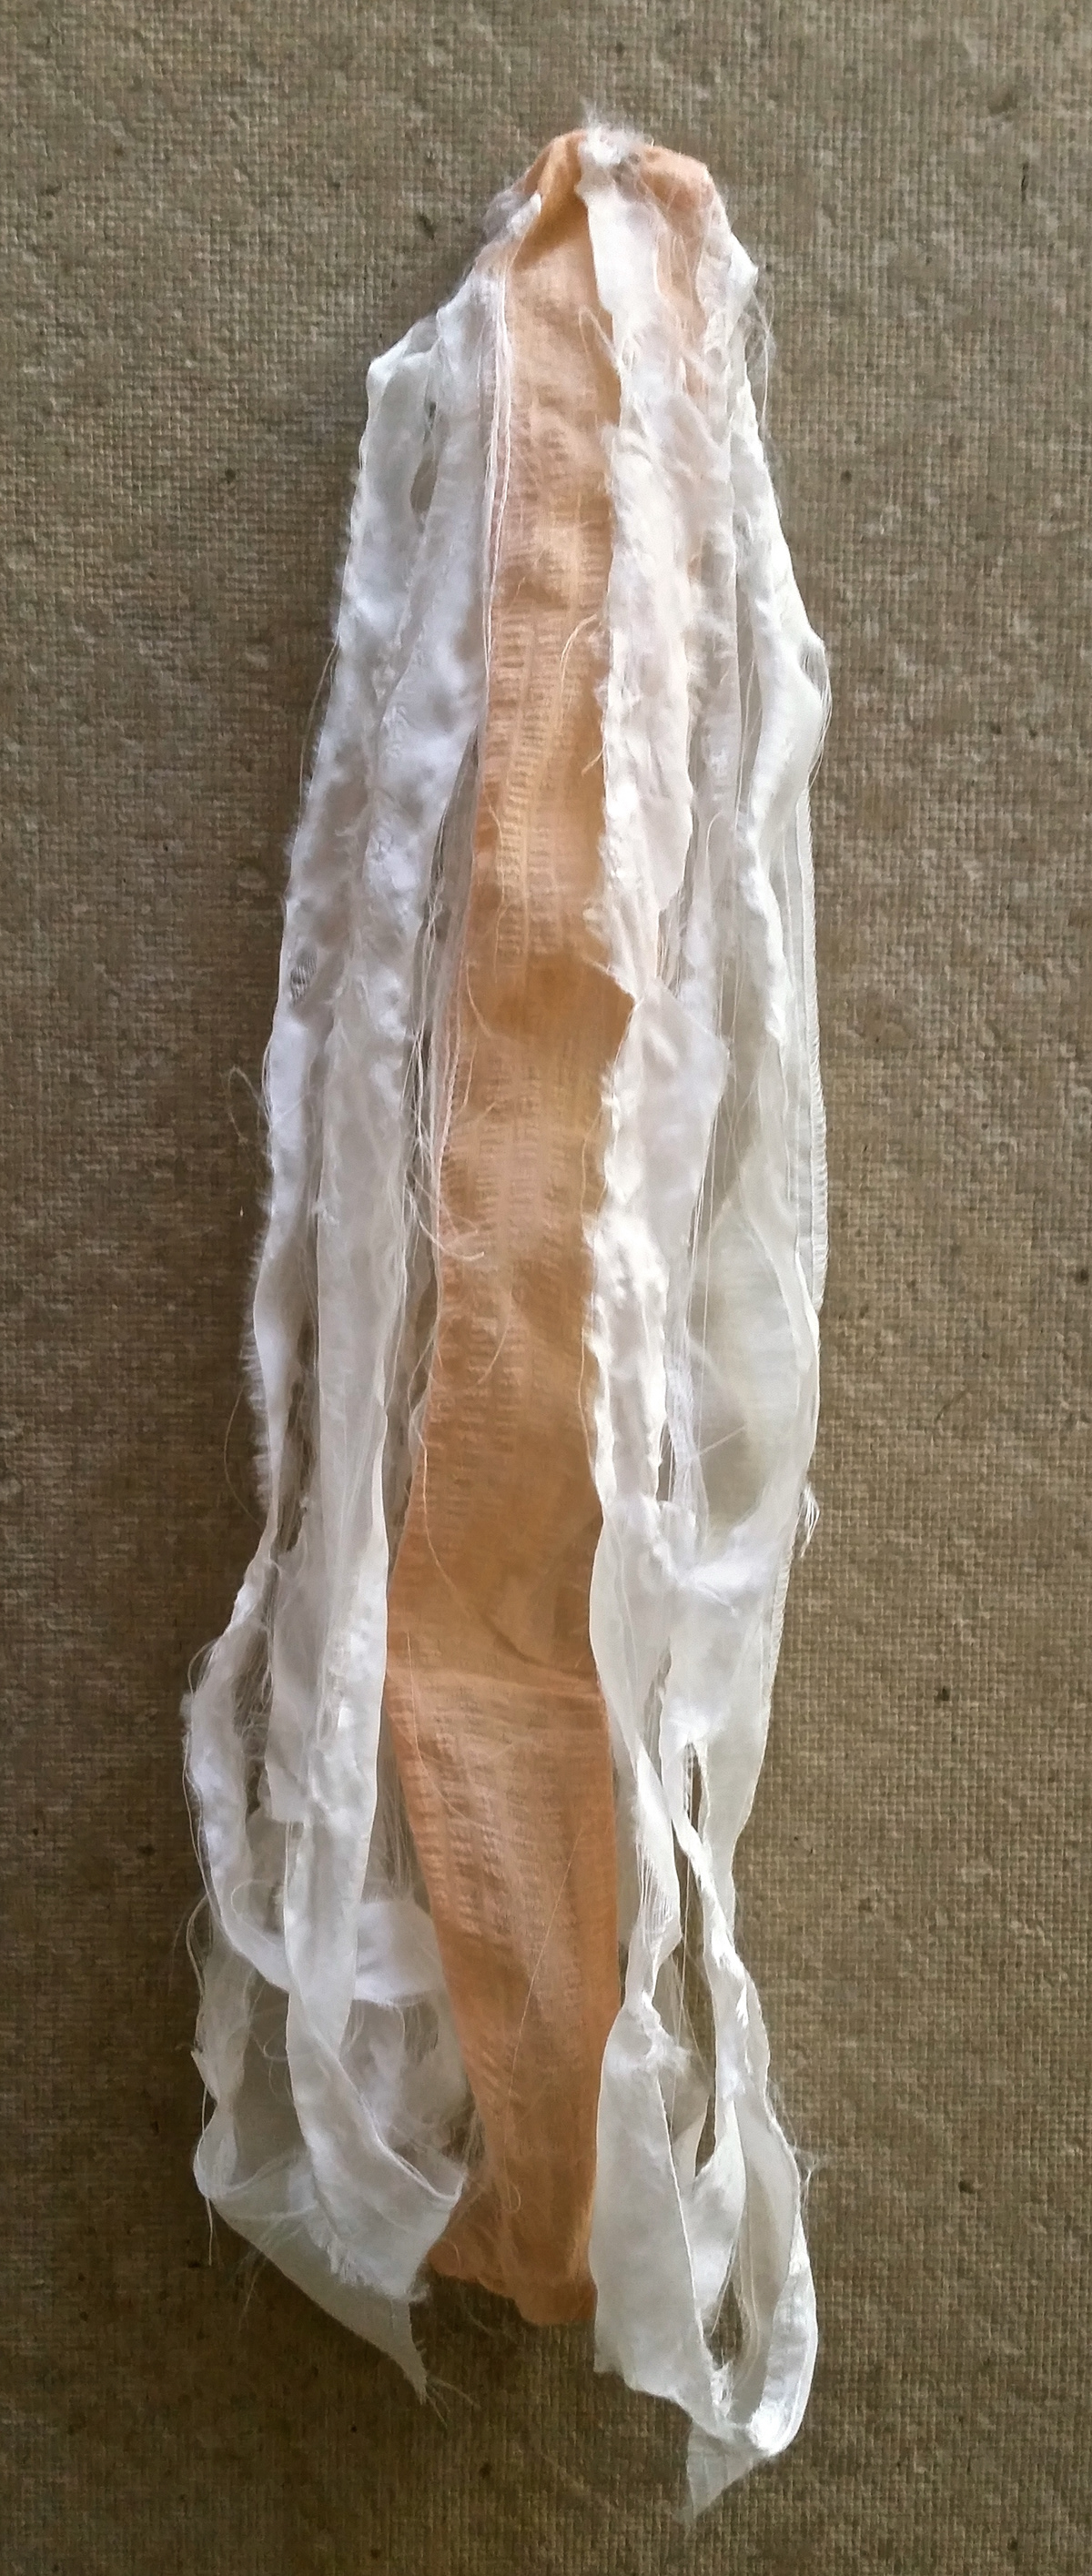 fiber piecework weaving studies masculinity fabric Found Fabric ACROSTIC